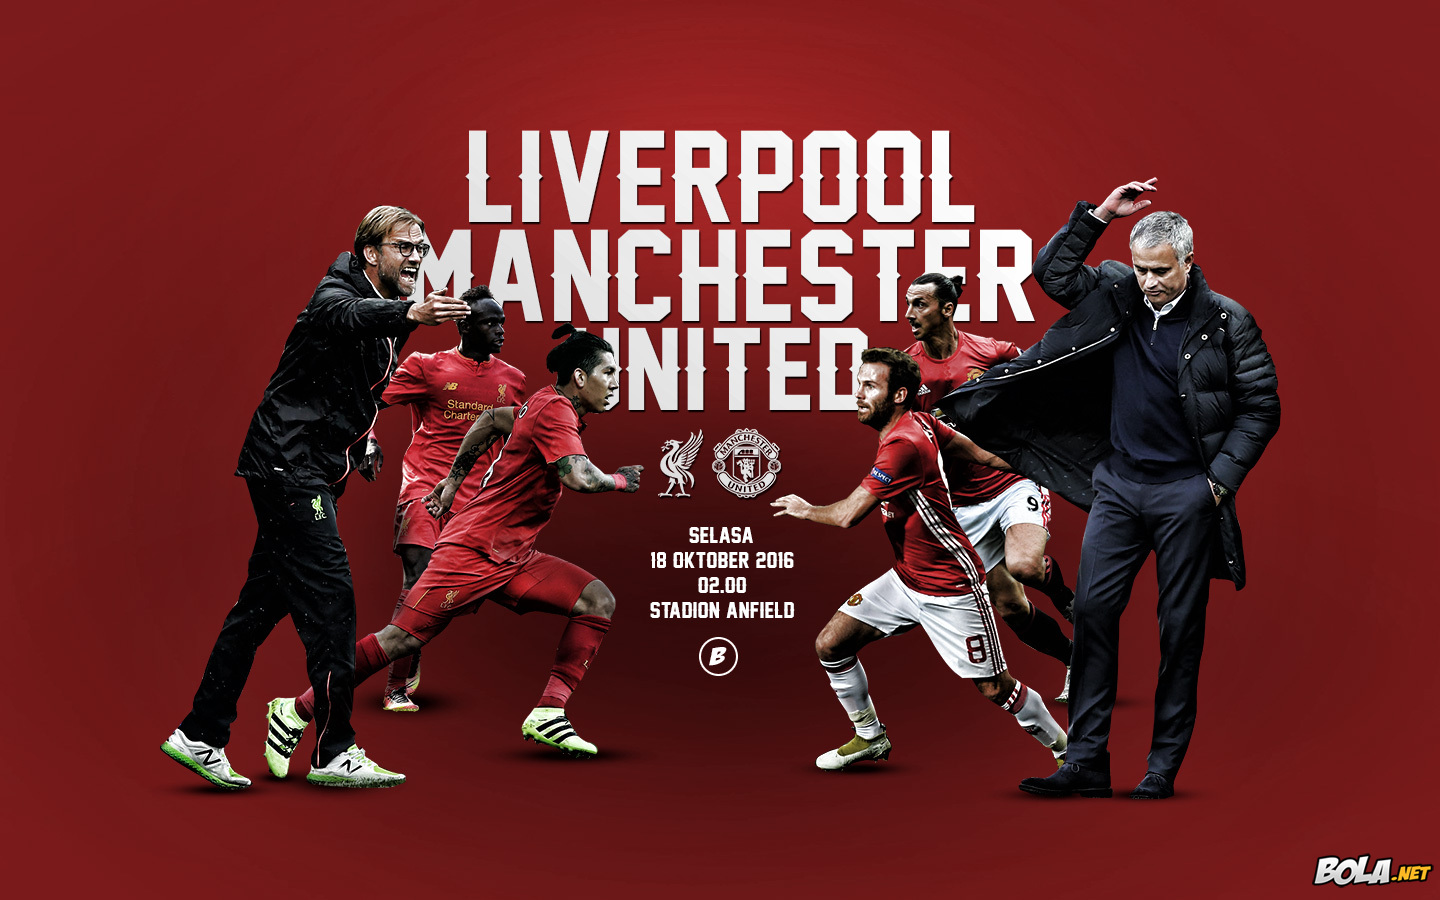 Deskripsi : Wallpaper Liverpool Vs Manchester United, size: 1440x900